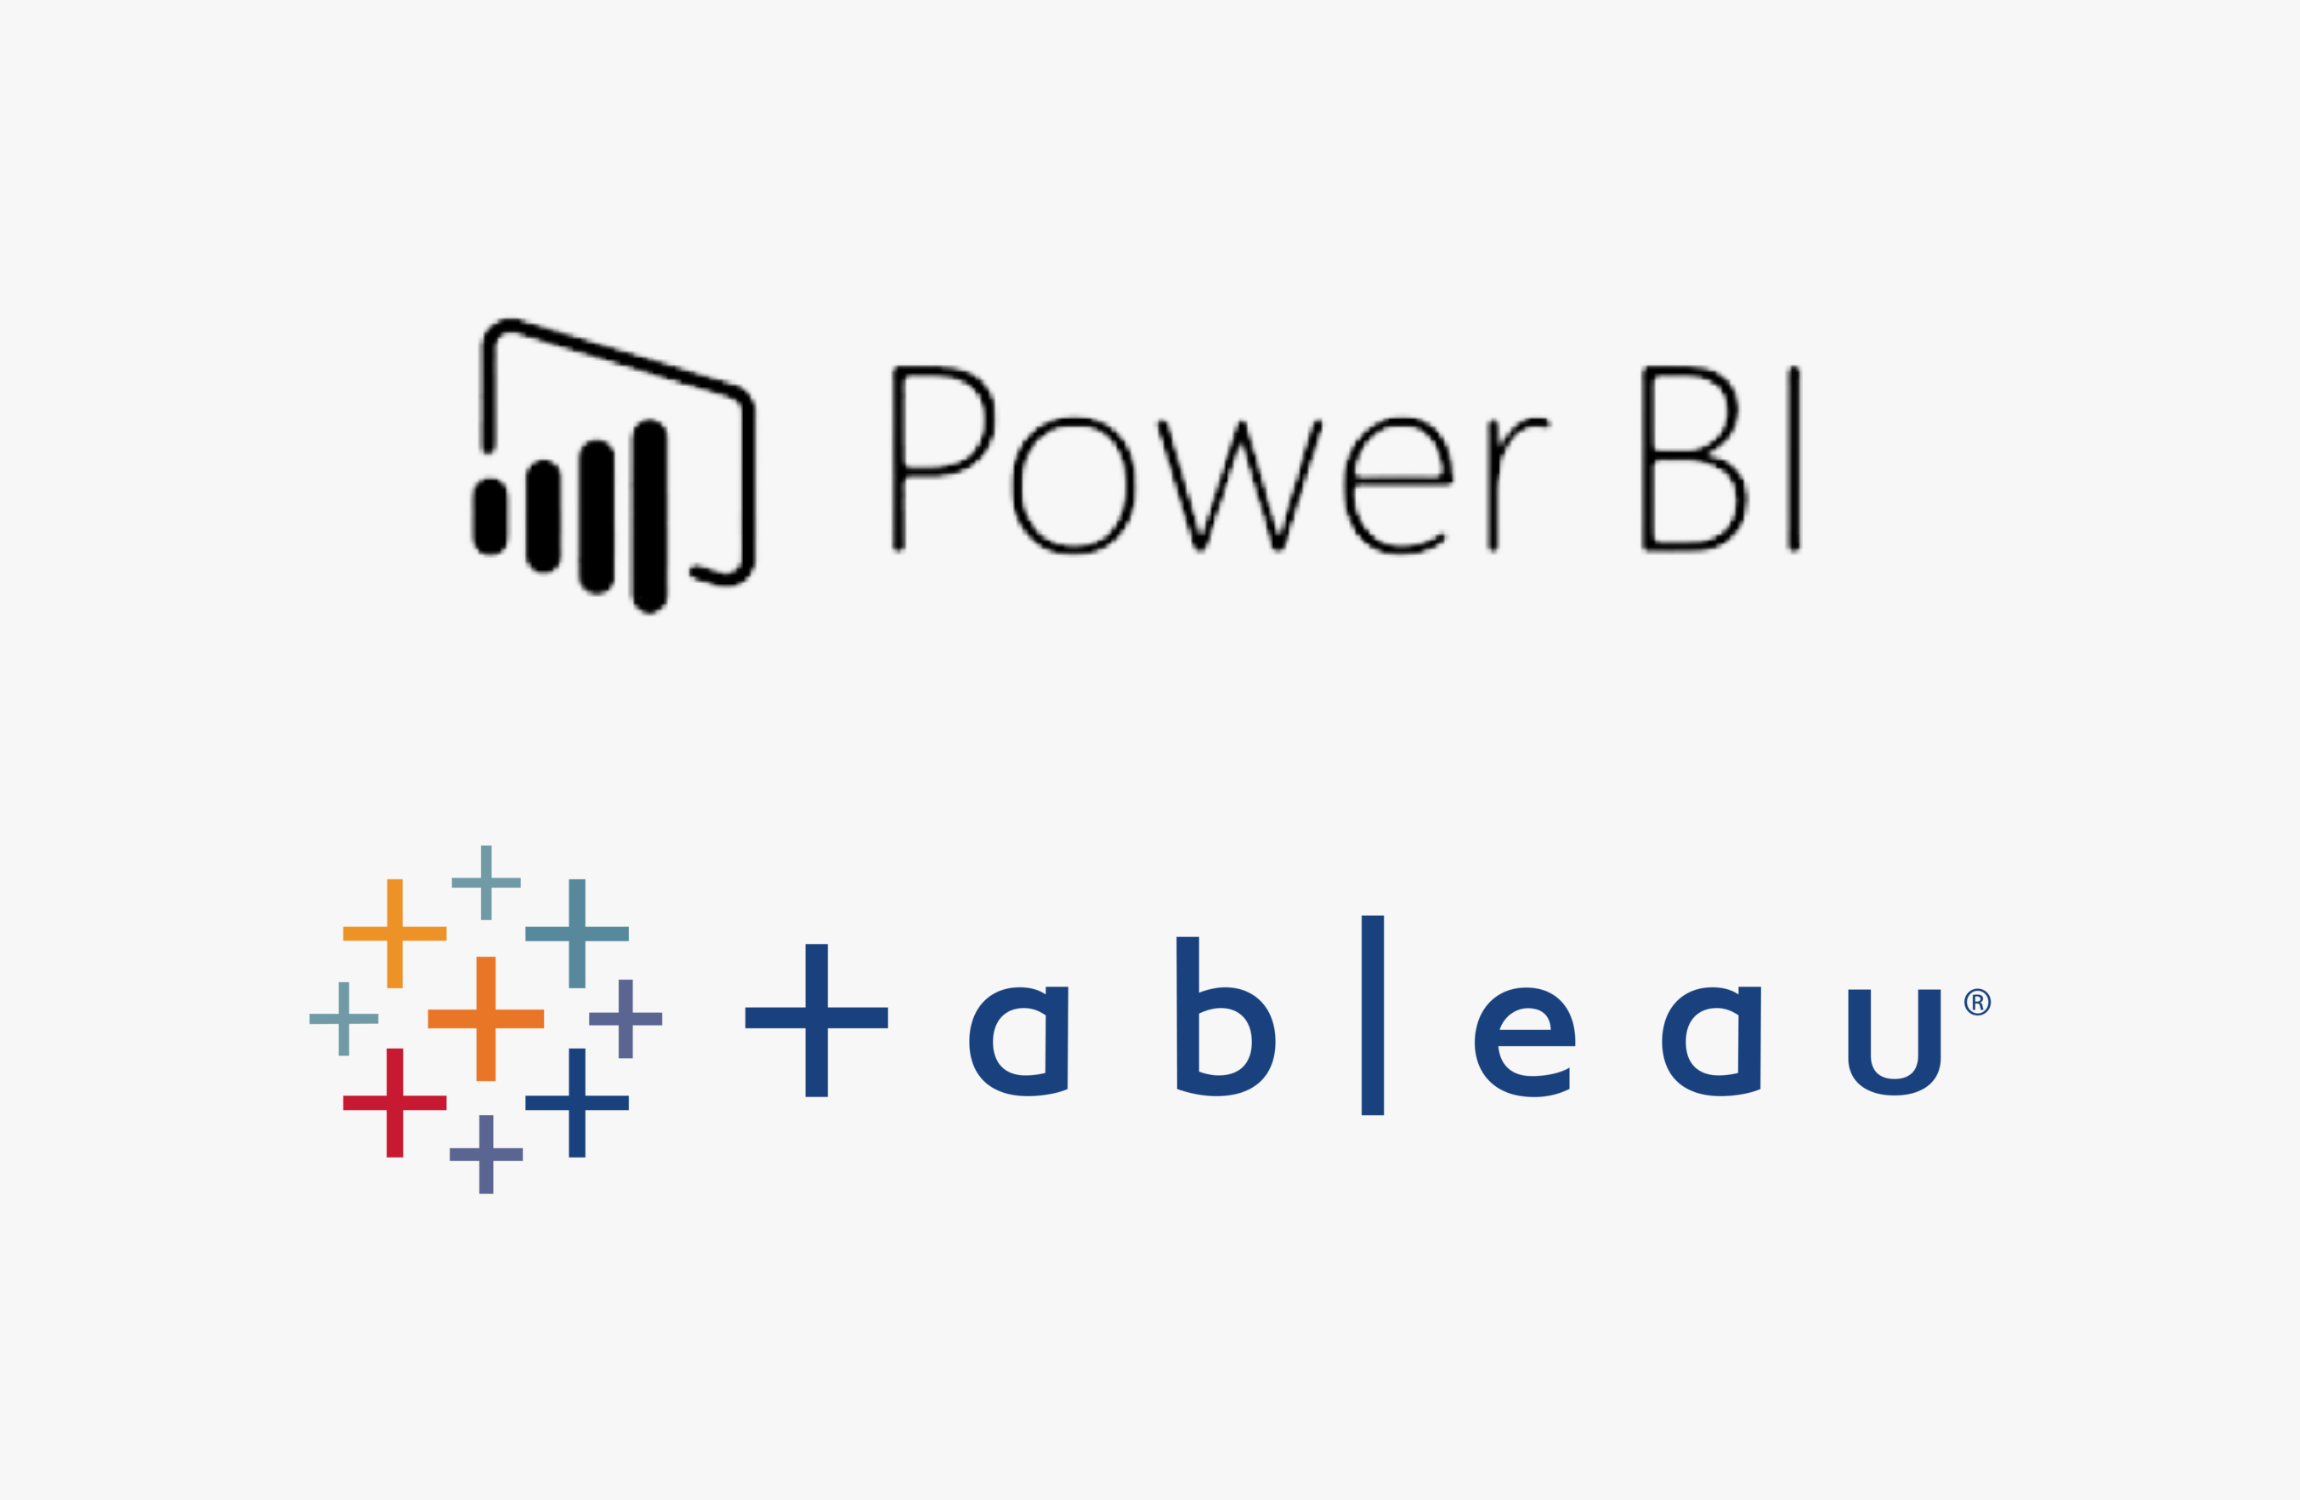 Microsoft Power BI Tableau